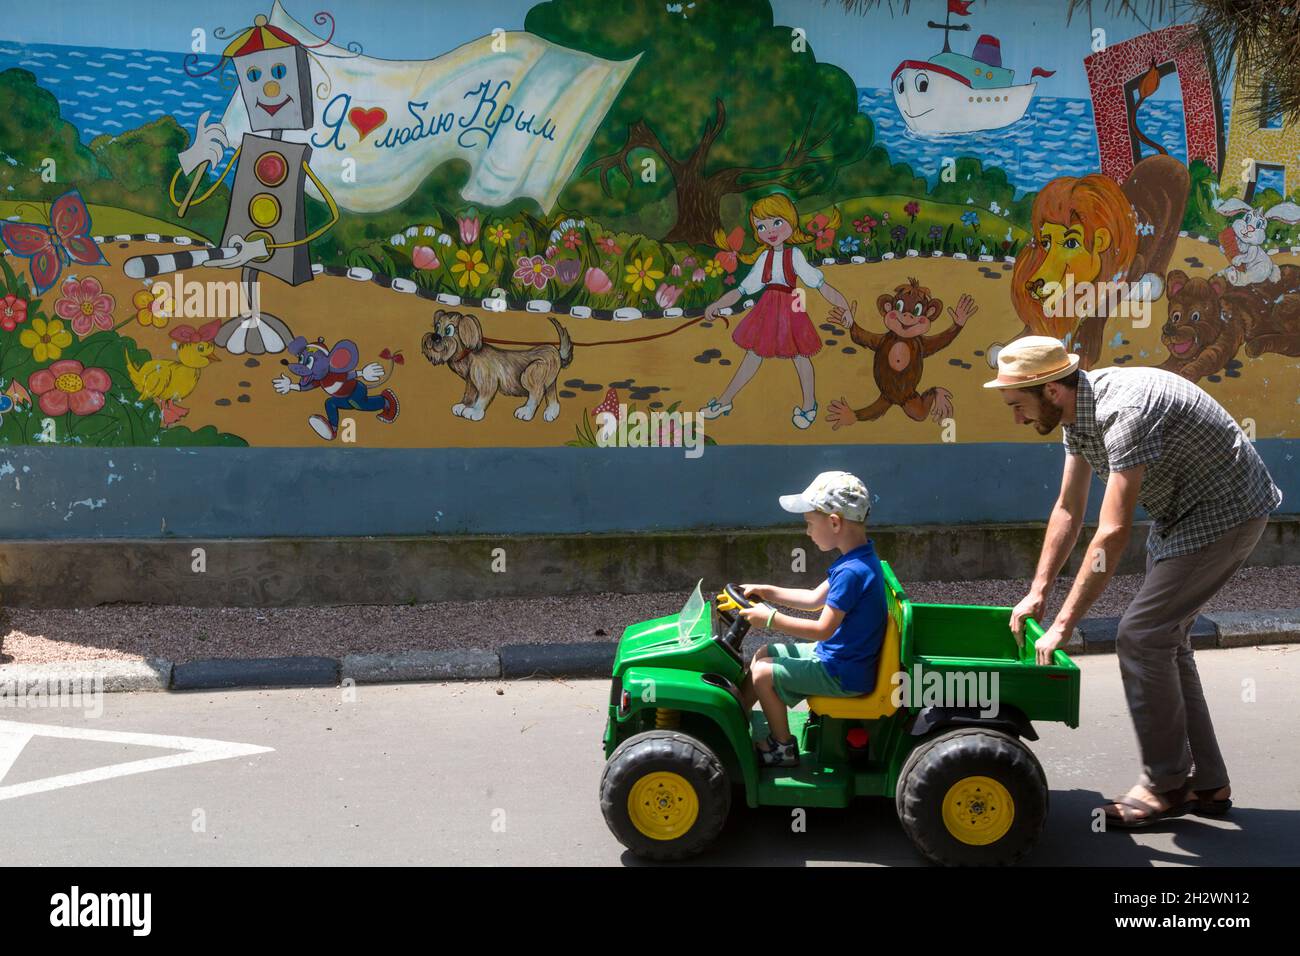 Simferopol, Republic of Crimea. 18th July, 2015 People walking in the square at the Children's Park in Simferopol city, Crimea. The insciption on the wall rads 'I Love Crimea' Stock Photo